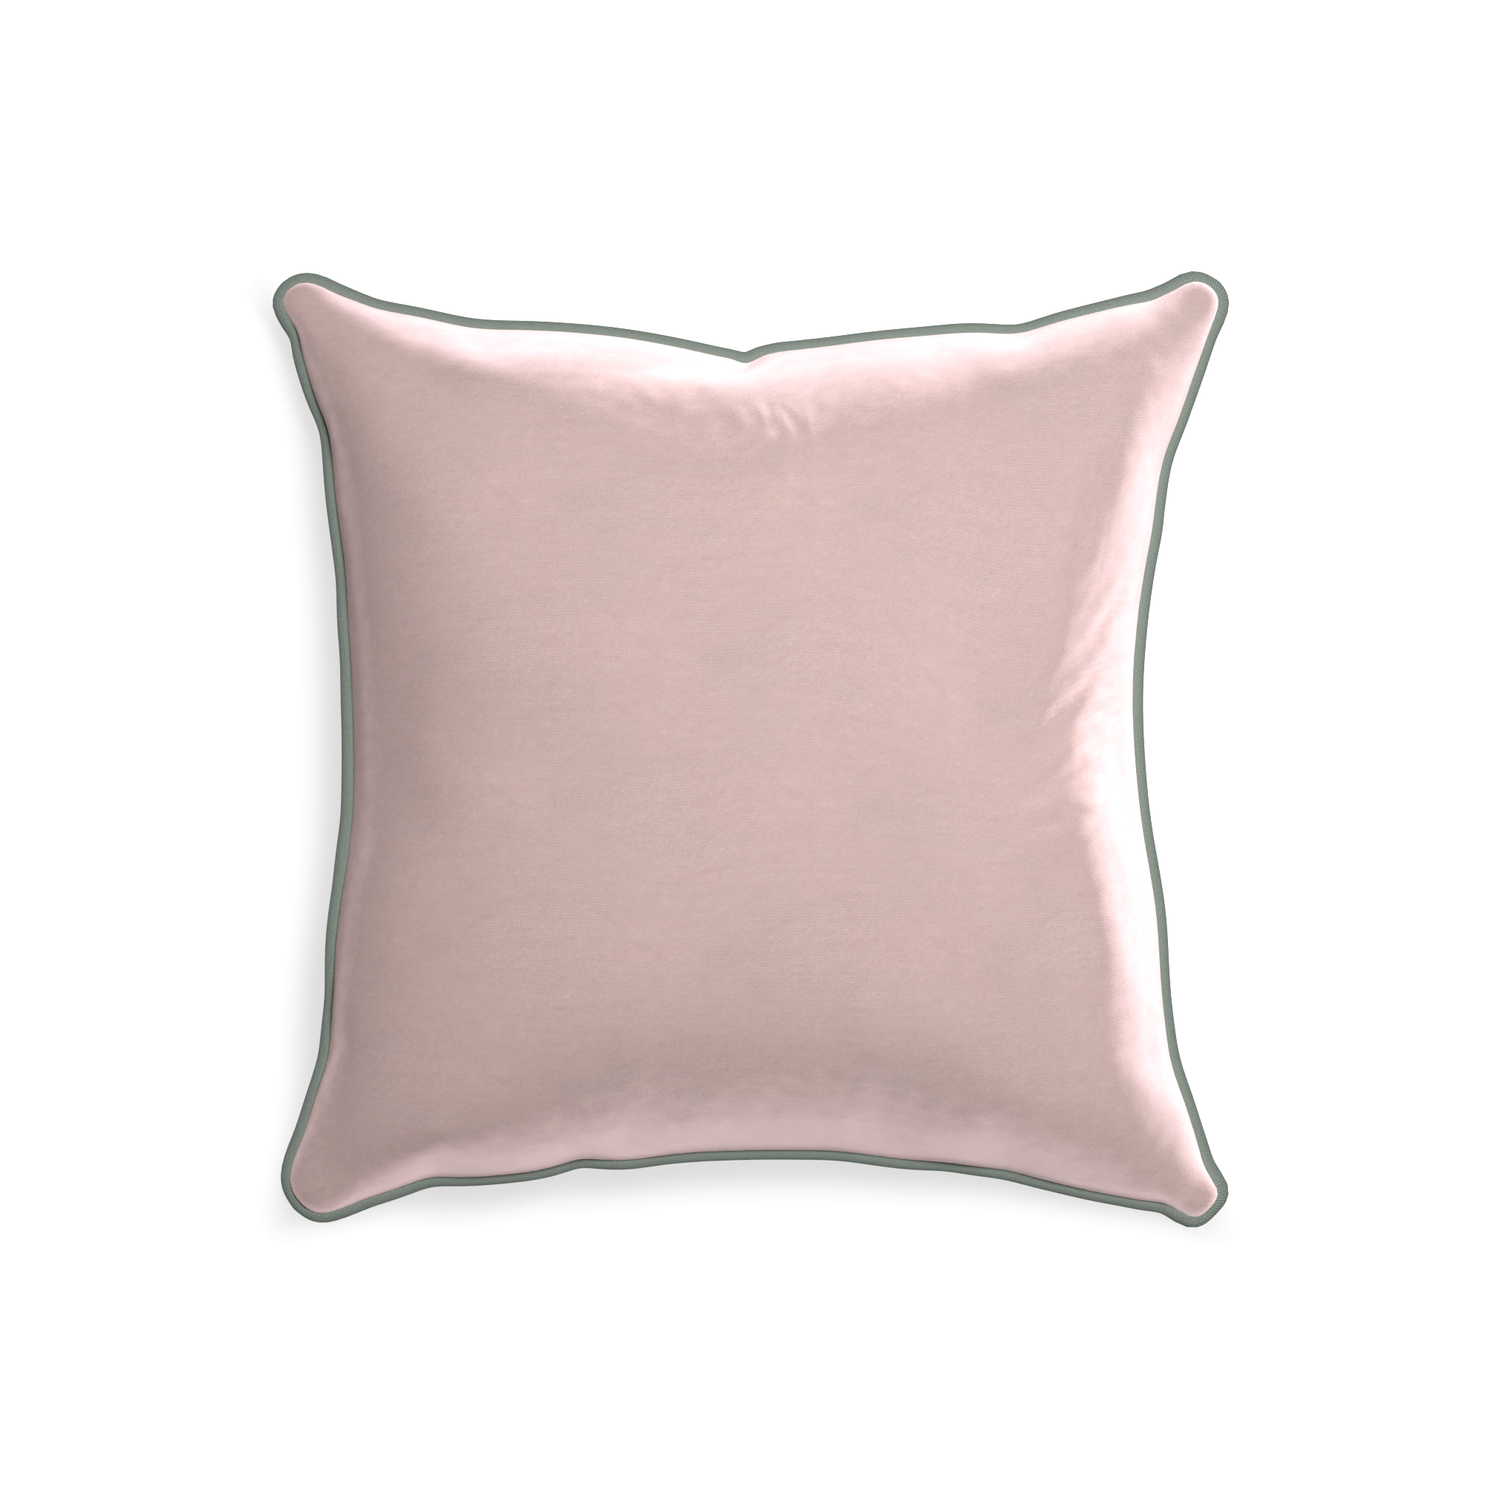 20-square rose velvet custom light pinkpillow with sage piping on white background